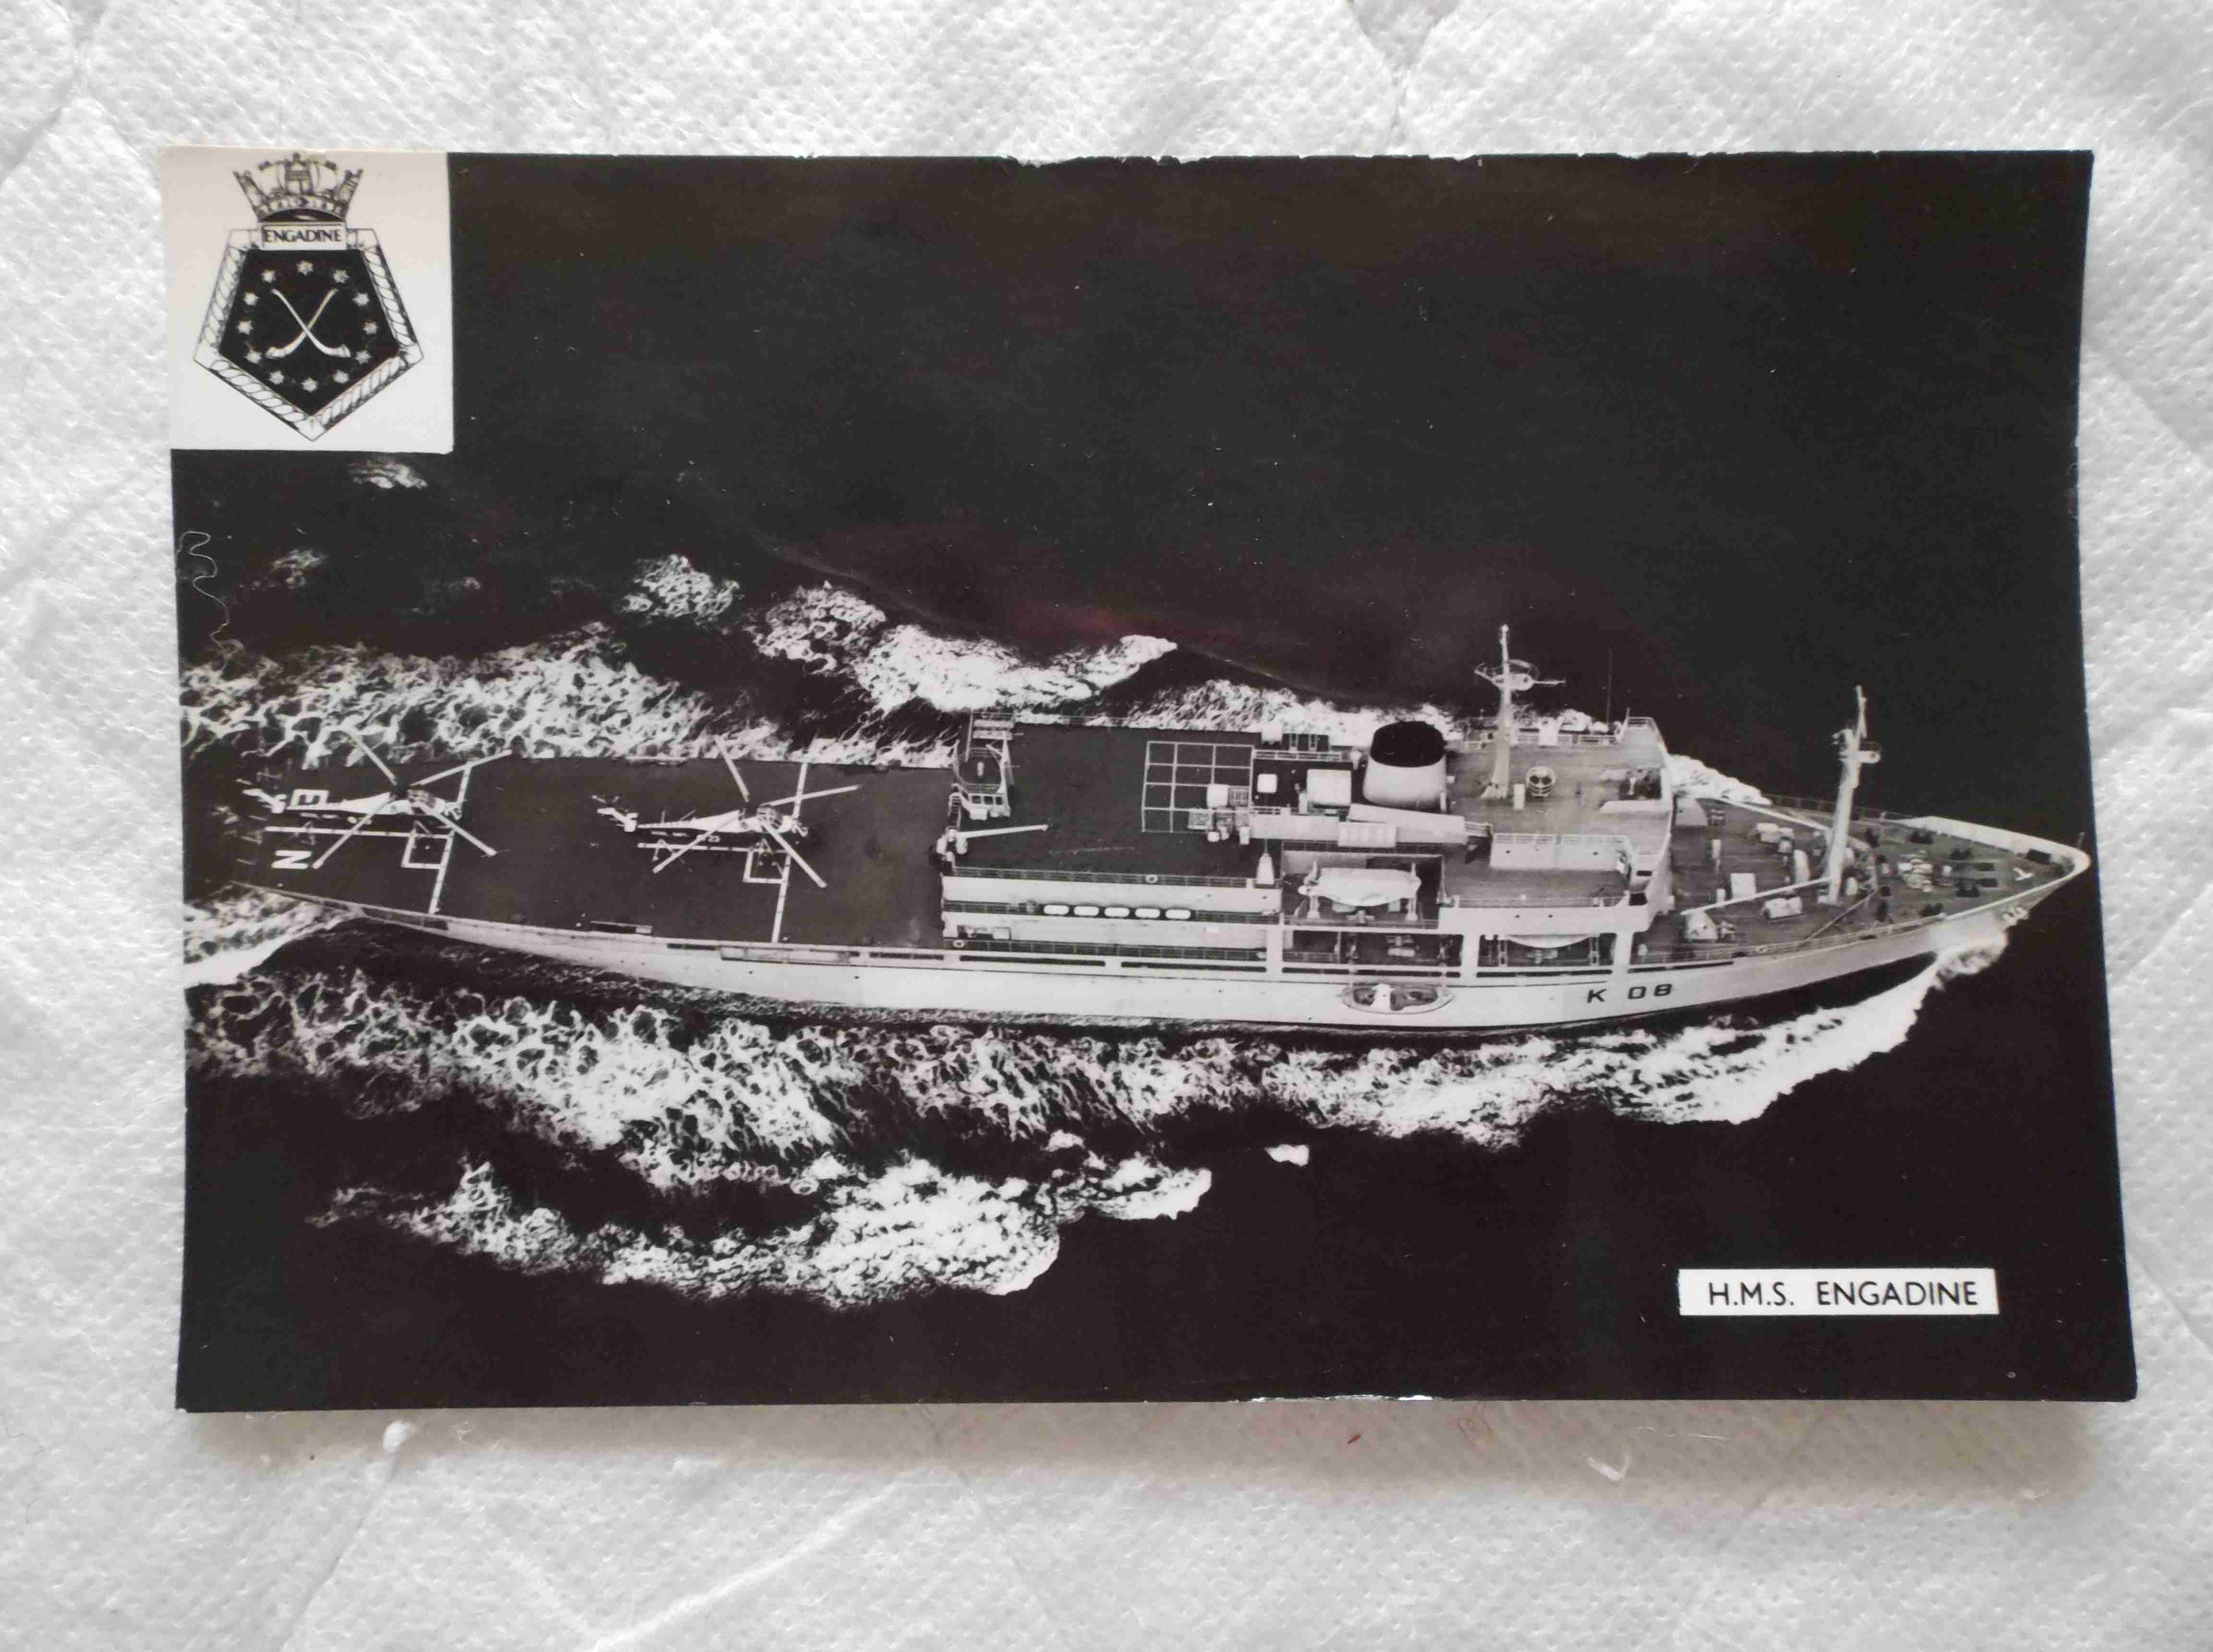 POSTCARD OF THE ROYAL NAVAL VESSEL HMS ENGADINE